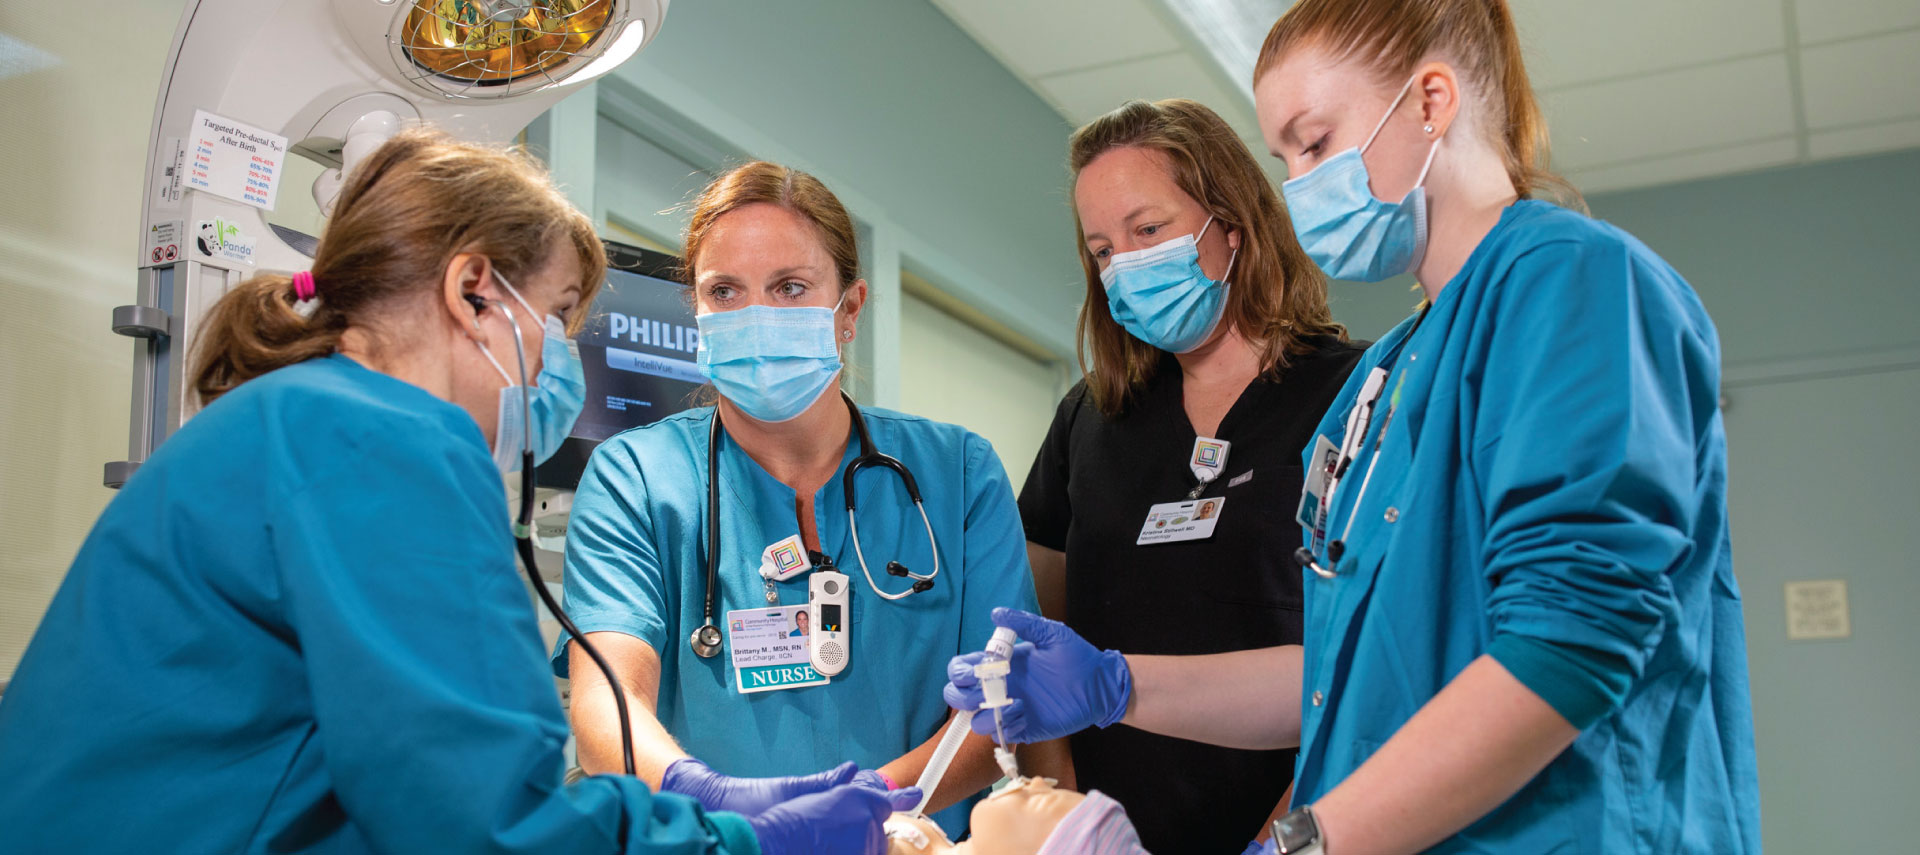 Family Birth Center simulation room — 
nurses during an infant resuscitation drill